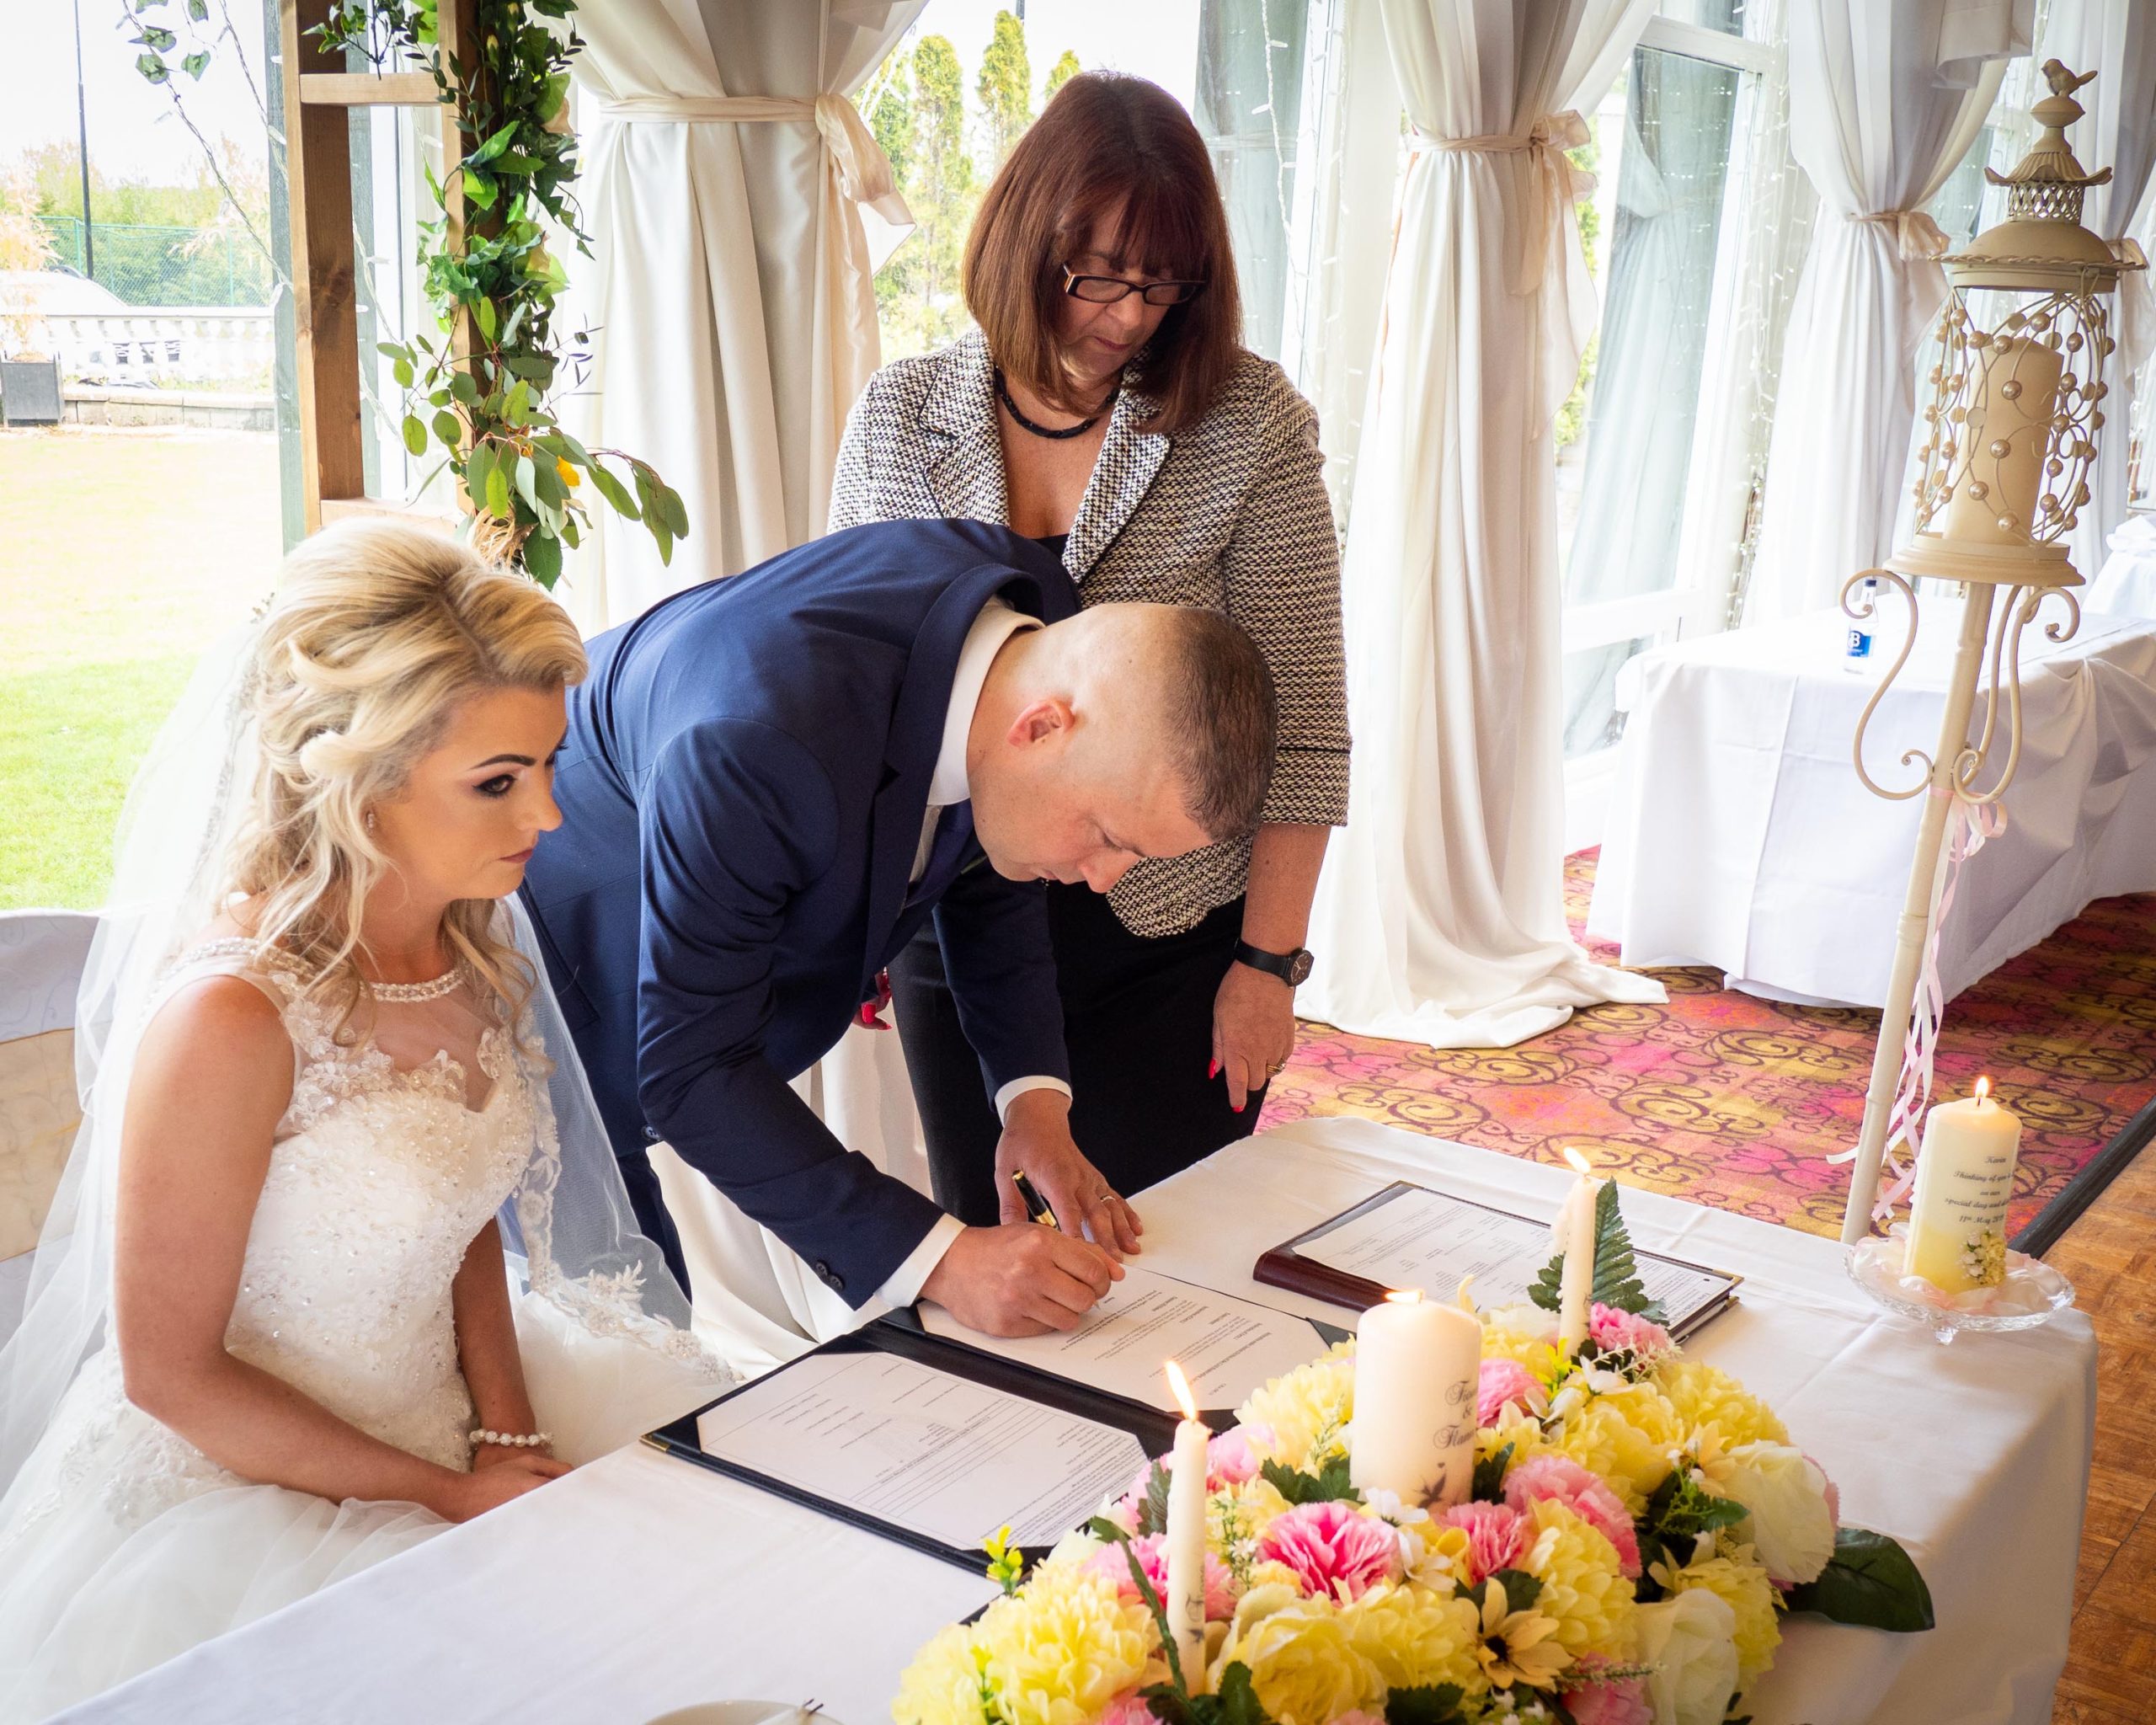 The Bride & Groom sign the Wedding register admidst the wedding festivities.